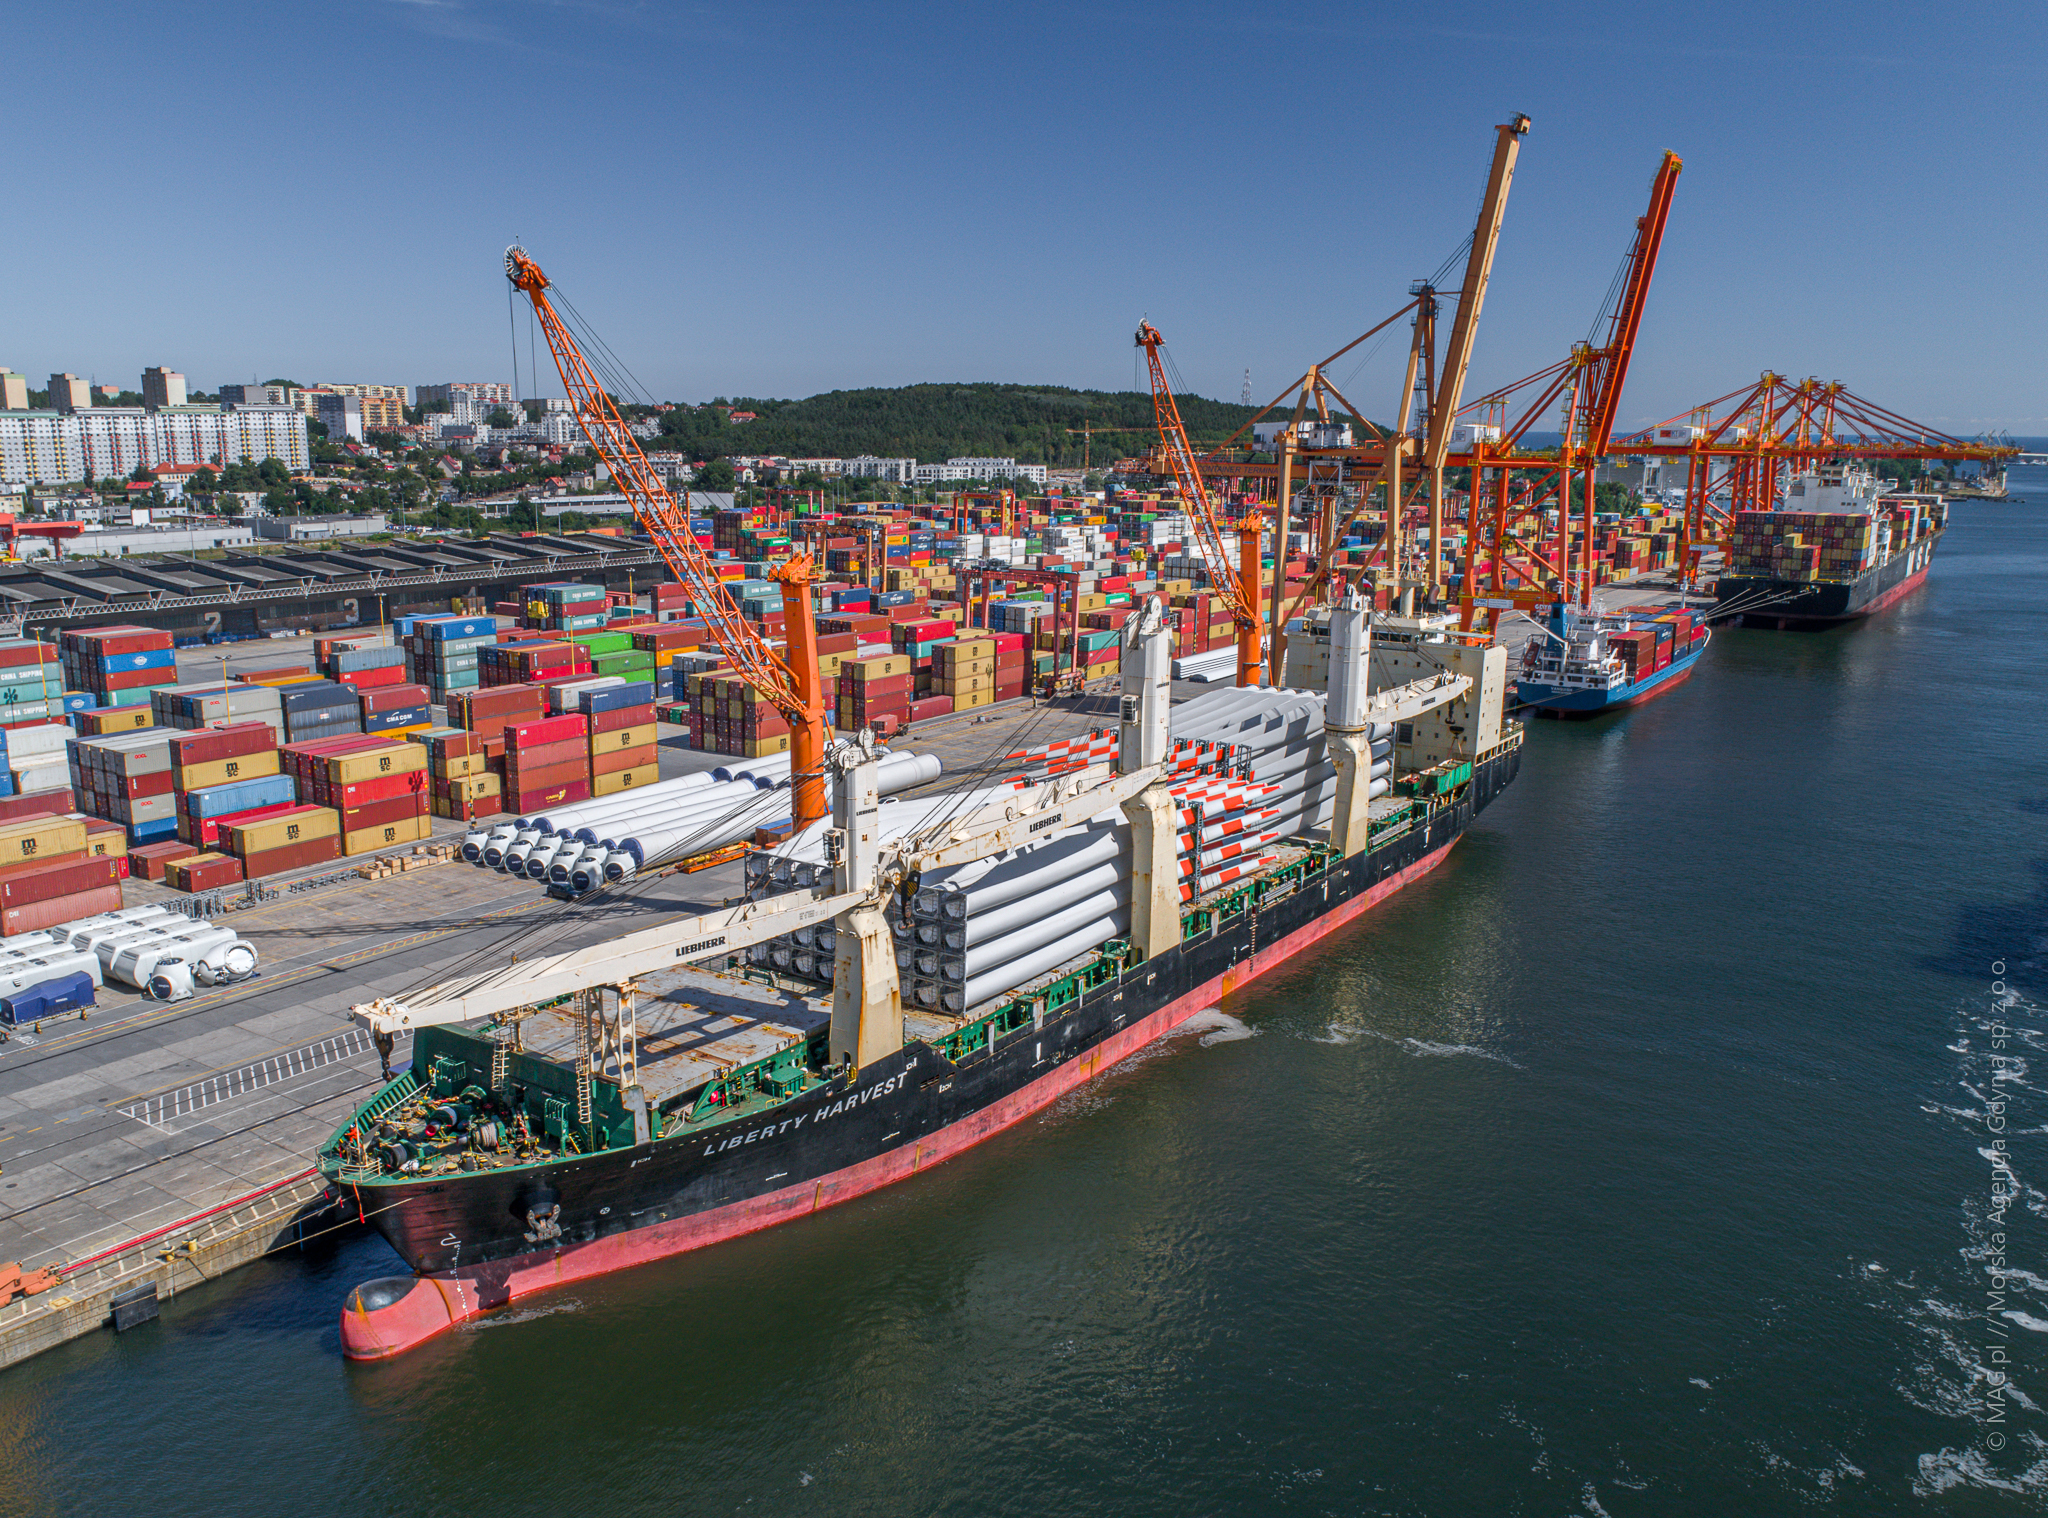 Morska Agencja Gdynia (MAG) has been providing complex logistics services for 70 years - MarinePoland.com